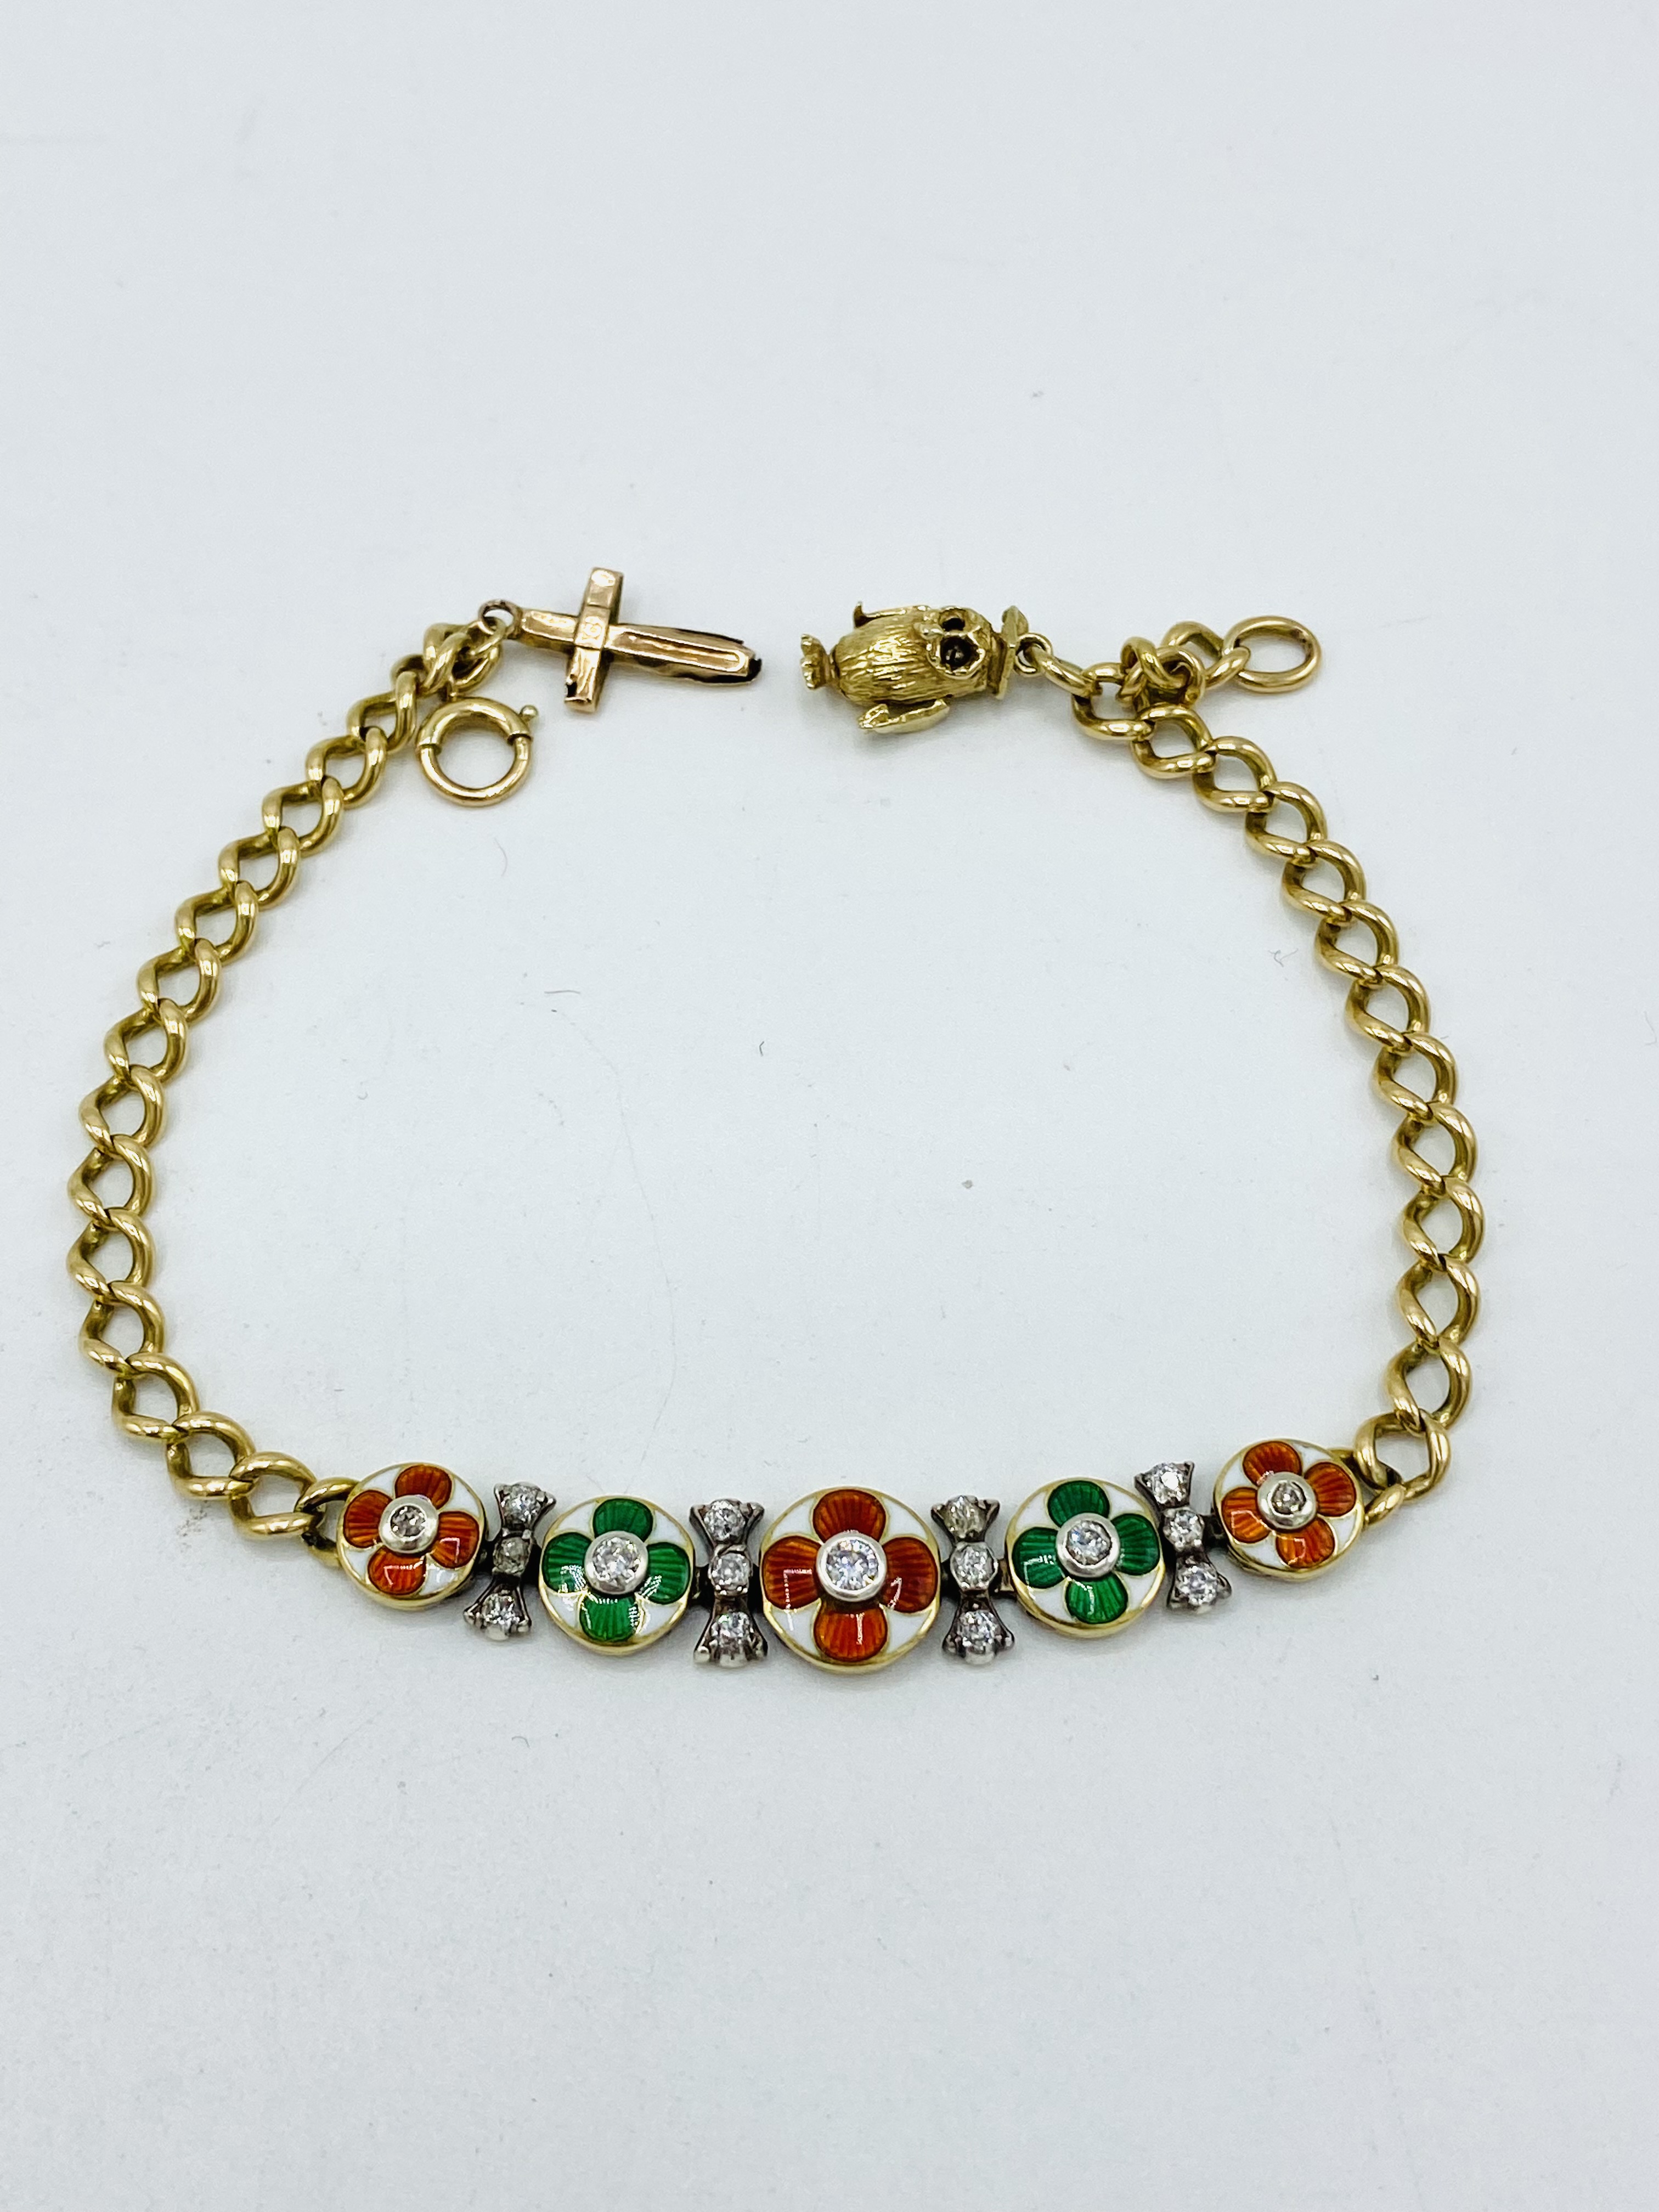 18ct gold bracelet with enamel flowers set with diamonds - Image 7 of 7